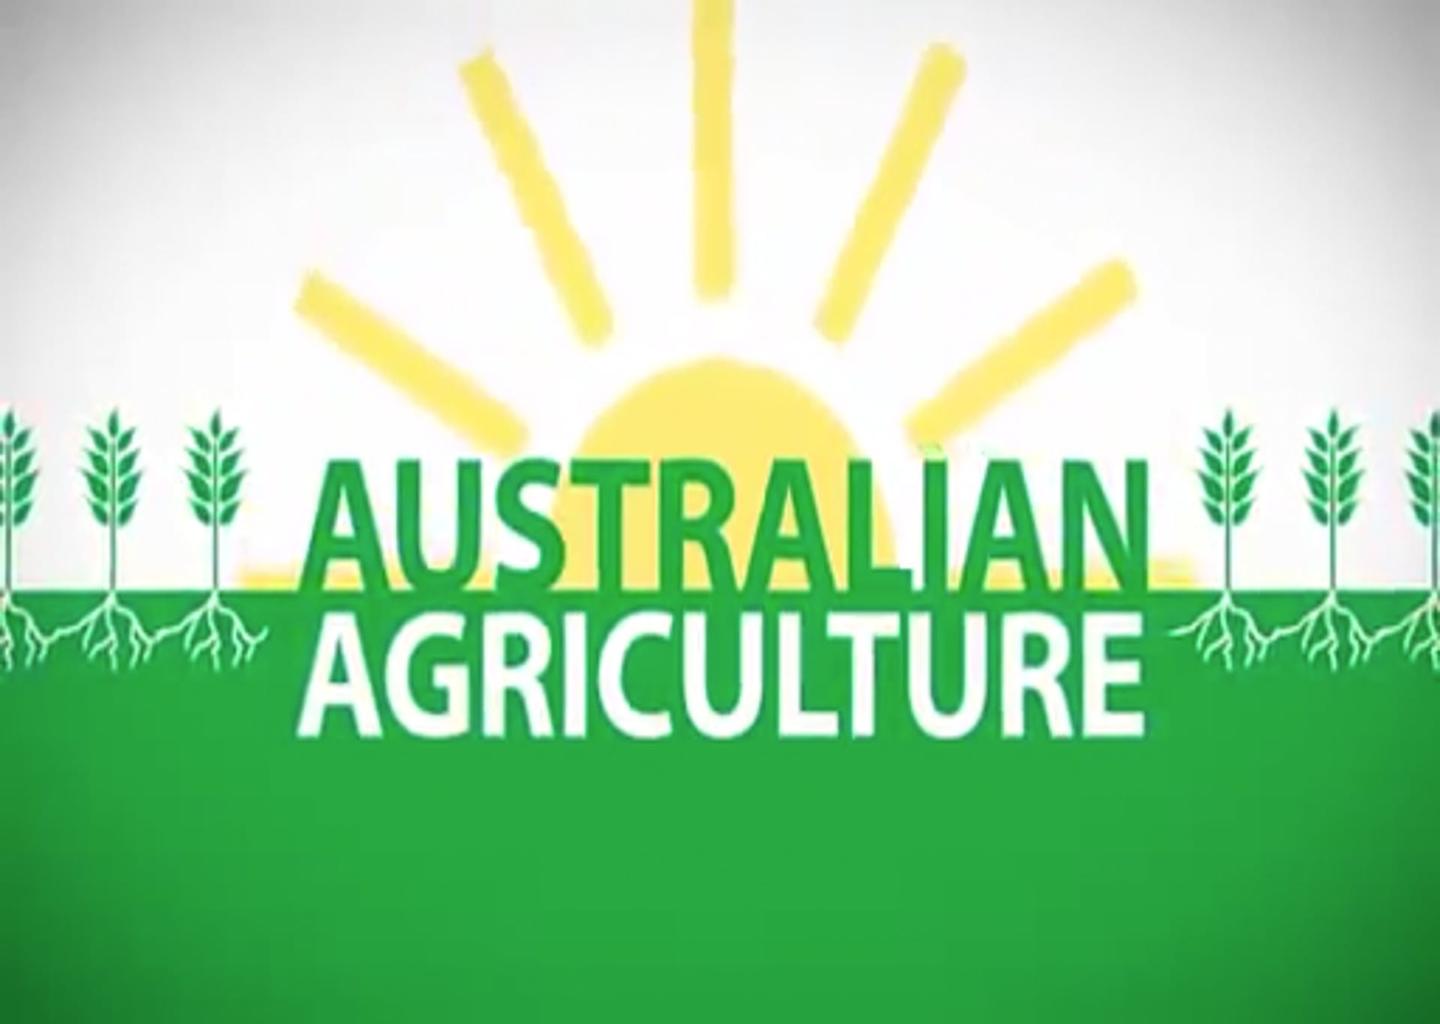 Australian Fresh Produce Alliance